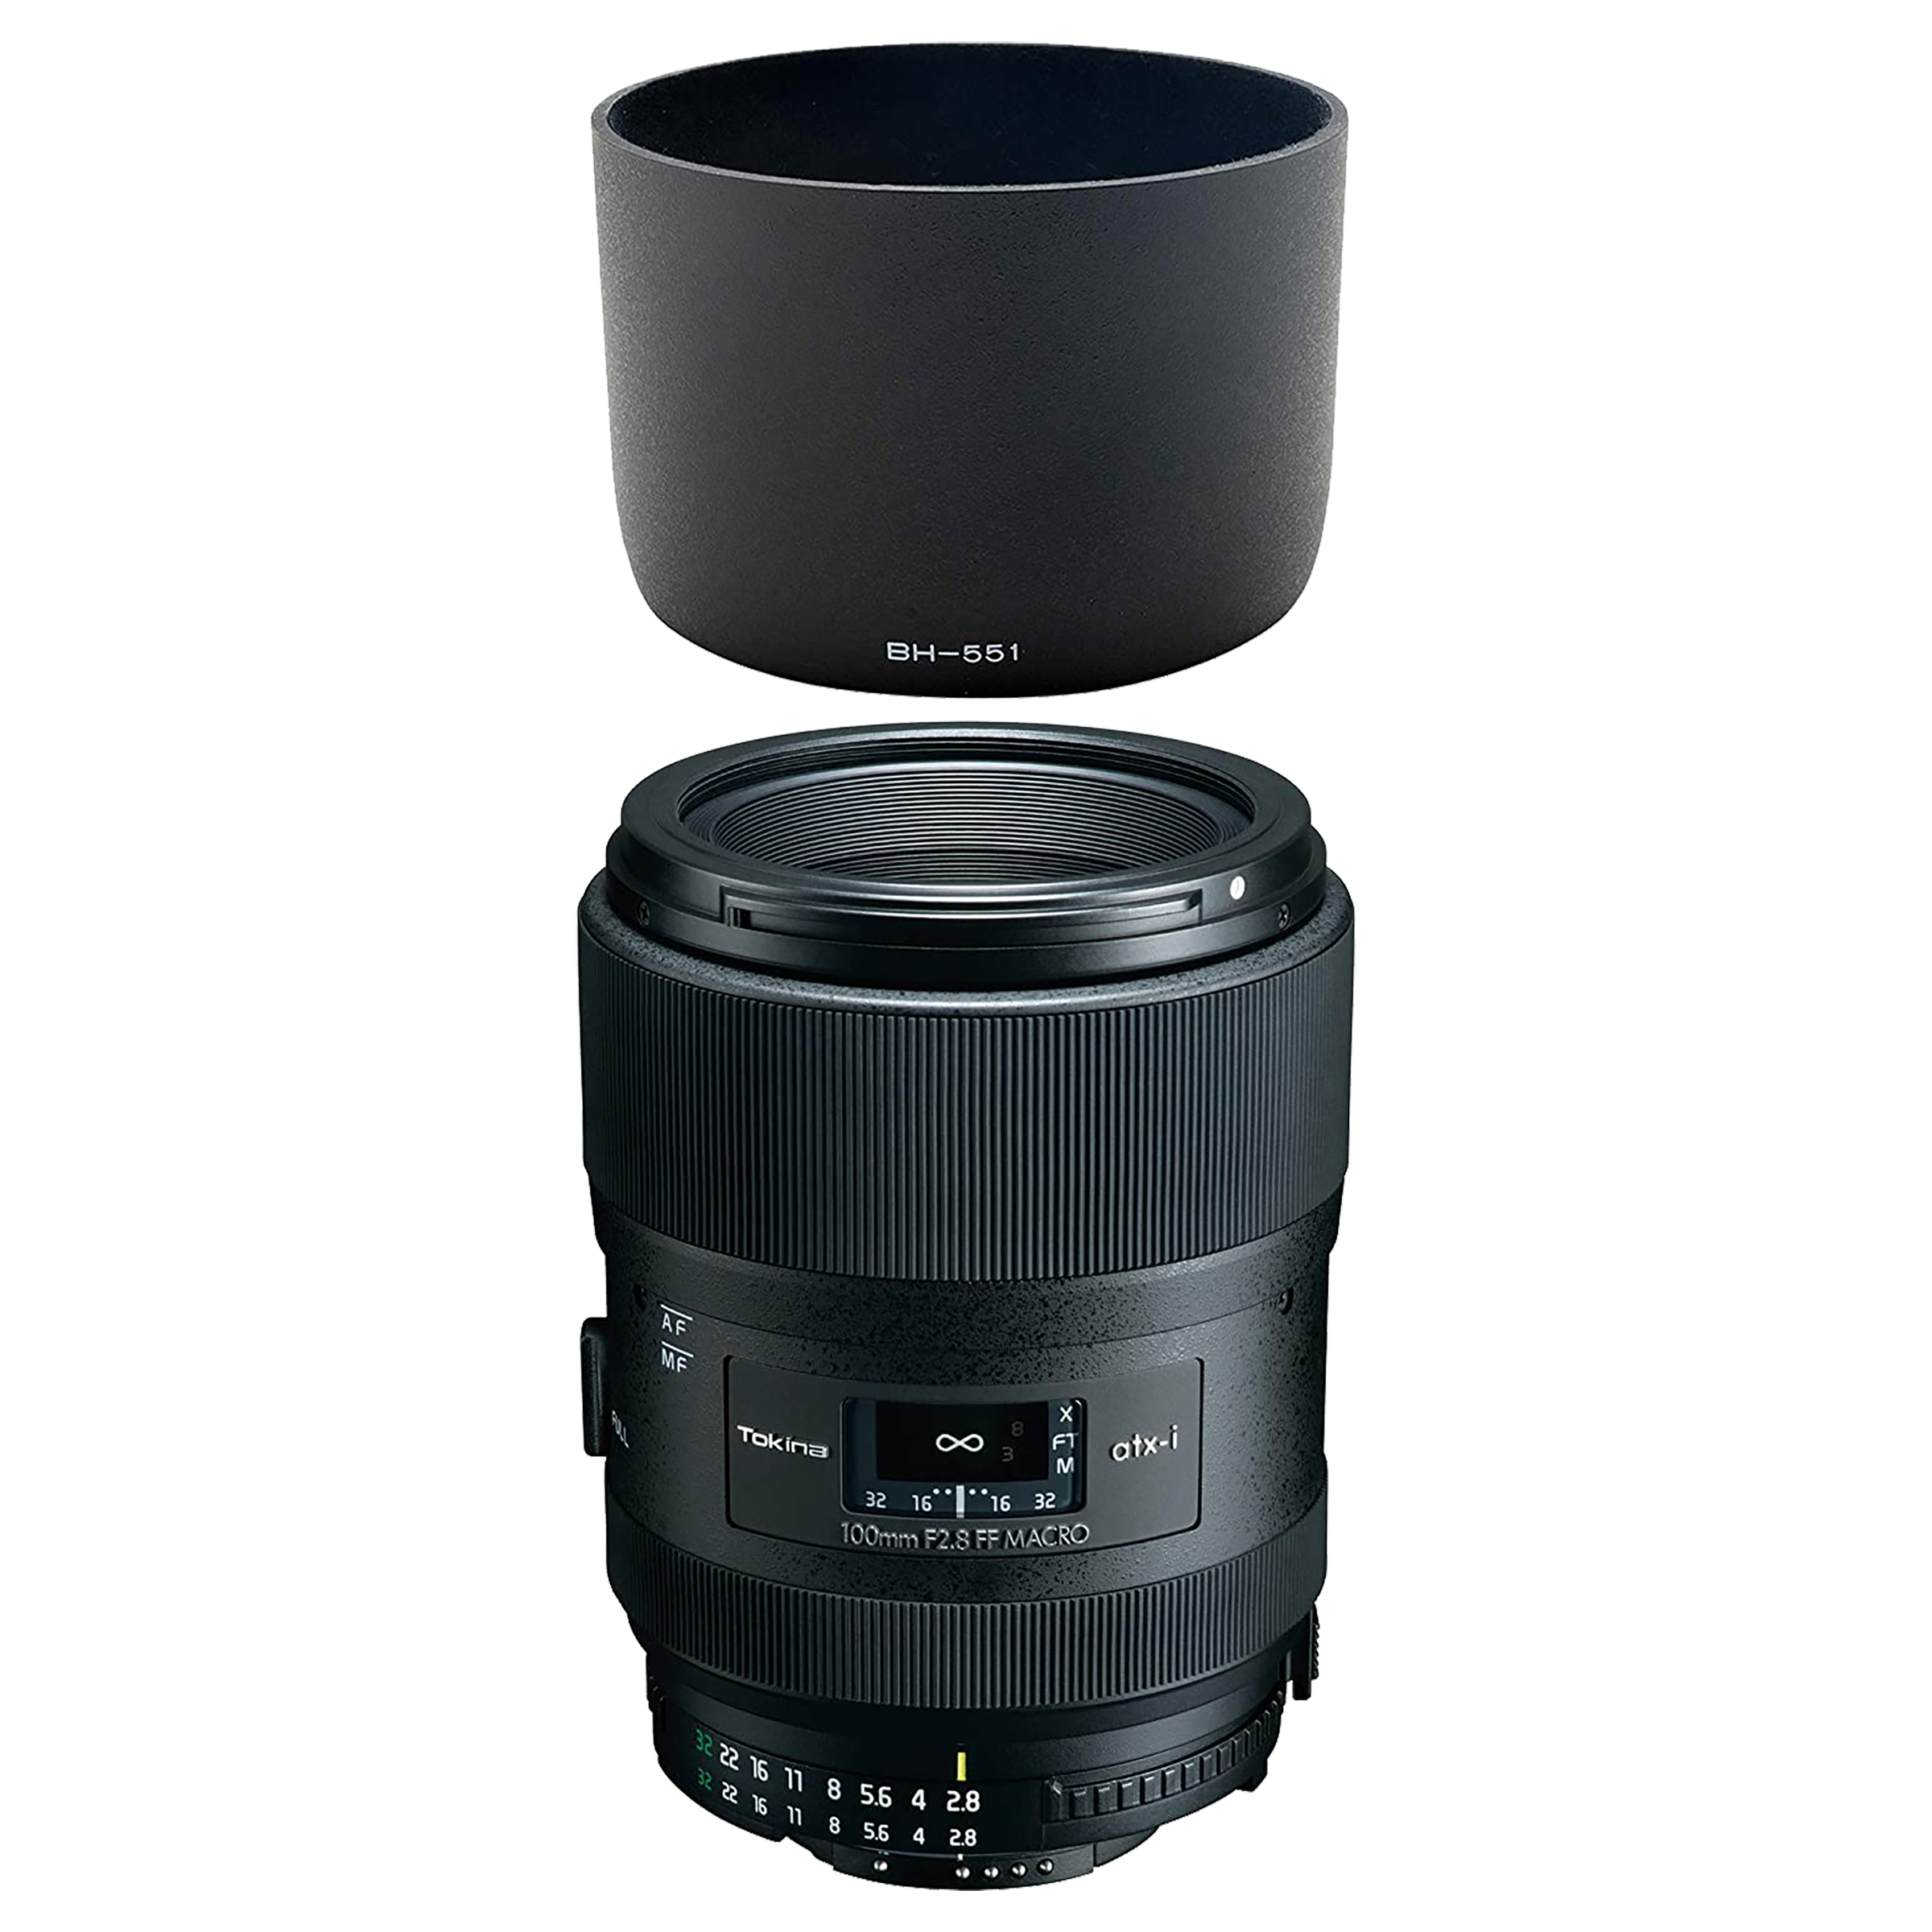 Tokina Atx-i 100 mm Max-f/2.8 And Min-f/32 Macro Lens (Extending Barrel Focusing System, 11D2662U01, Black)_1